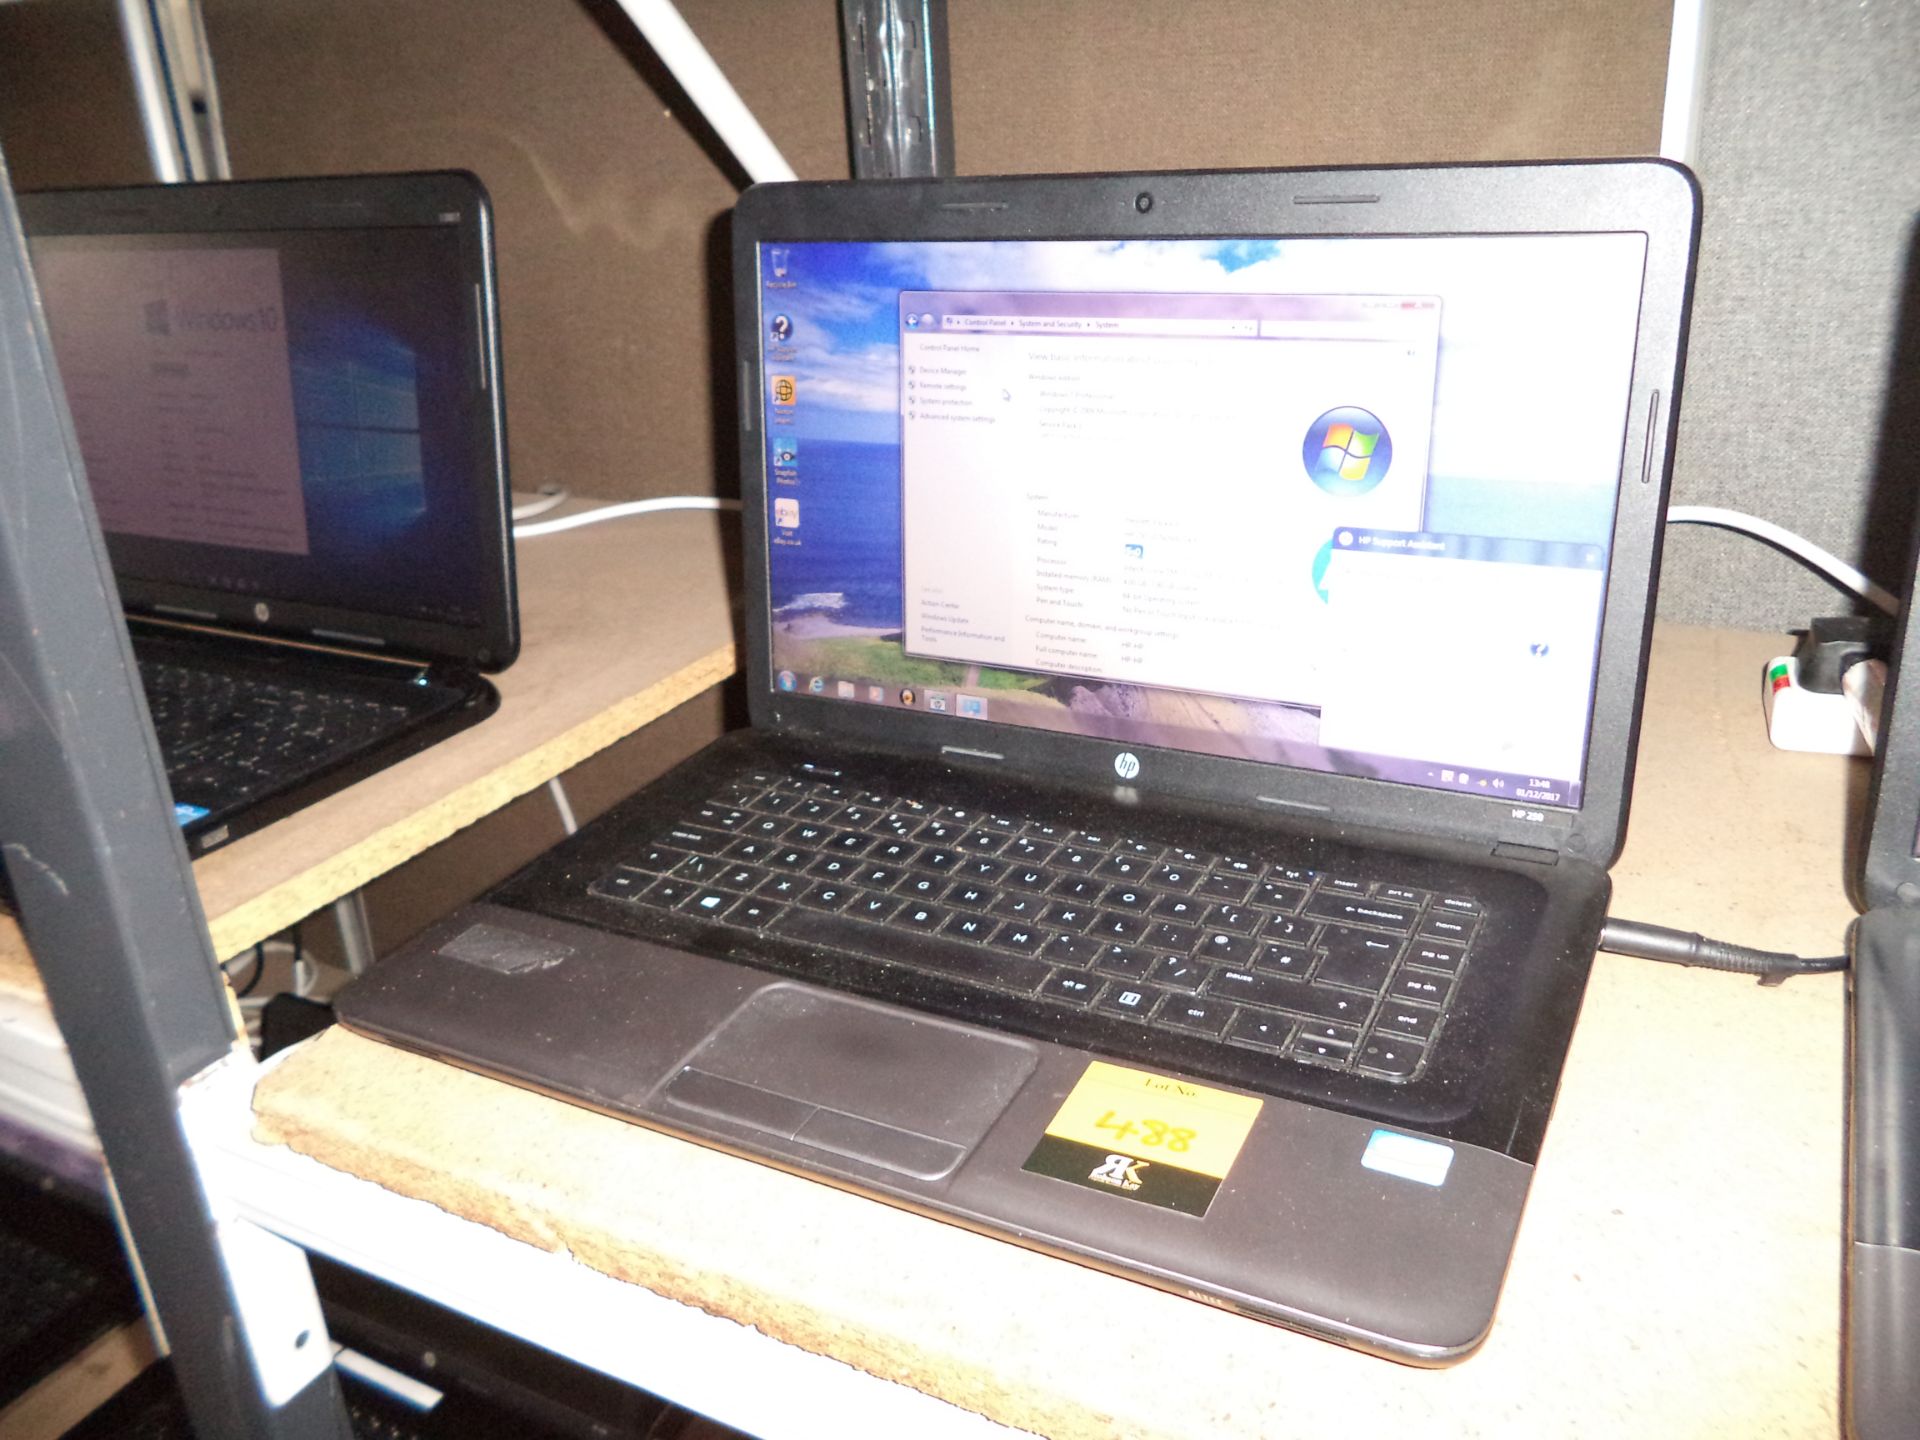 HP ProBook 250 G1 notebook computer with 15.6" widescreen display & built-in webcam plus DVD writer, - Image 2 of 3